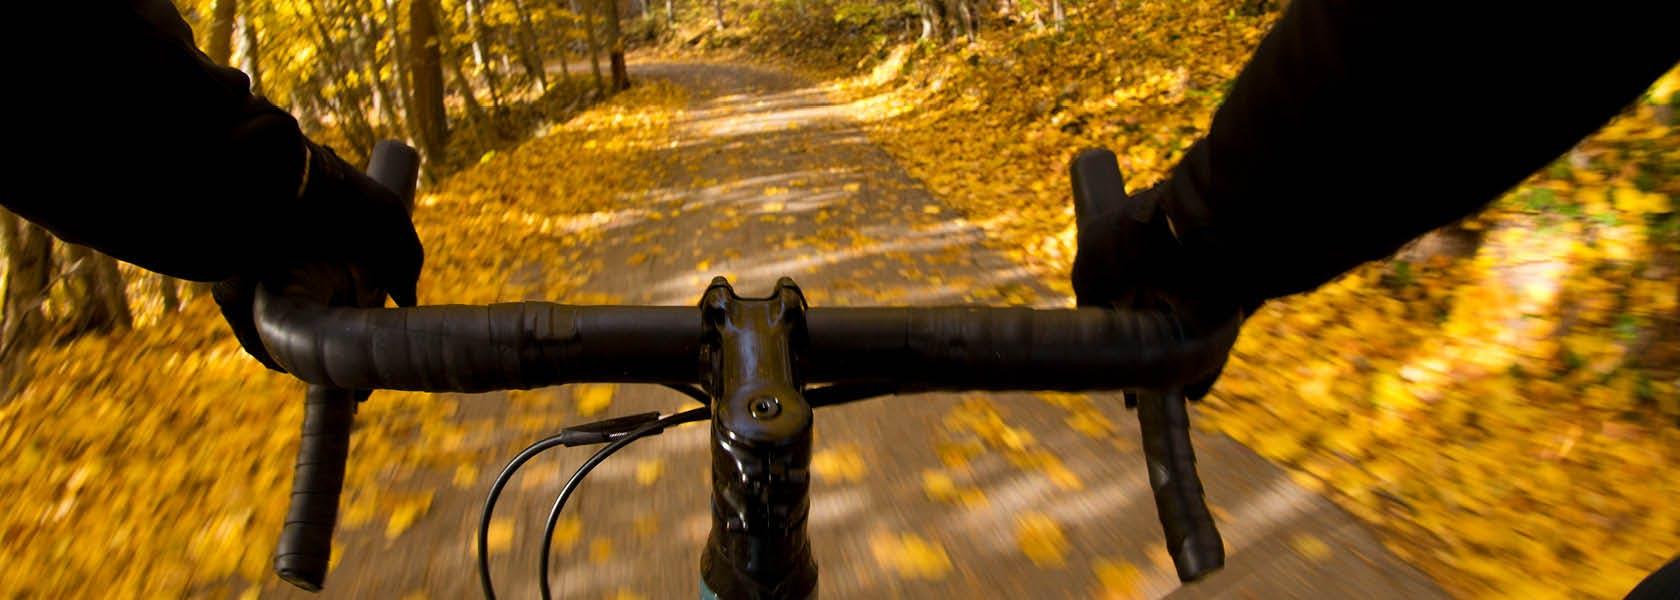 POV shot of cyclists handlebars on autumnal road